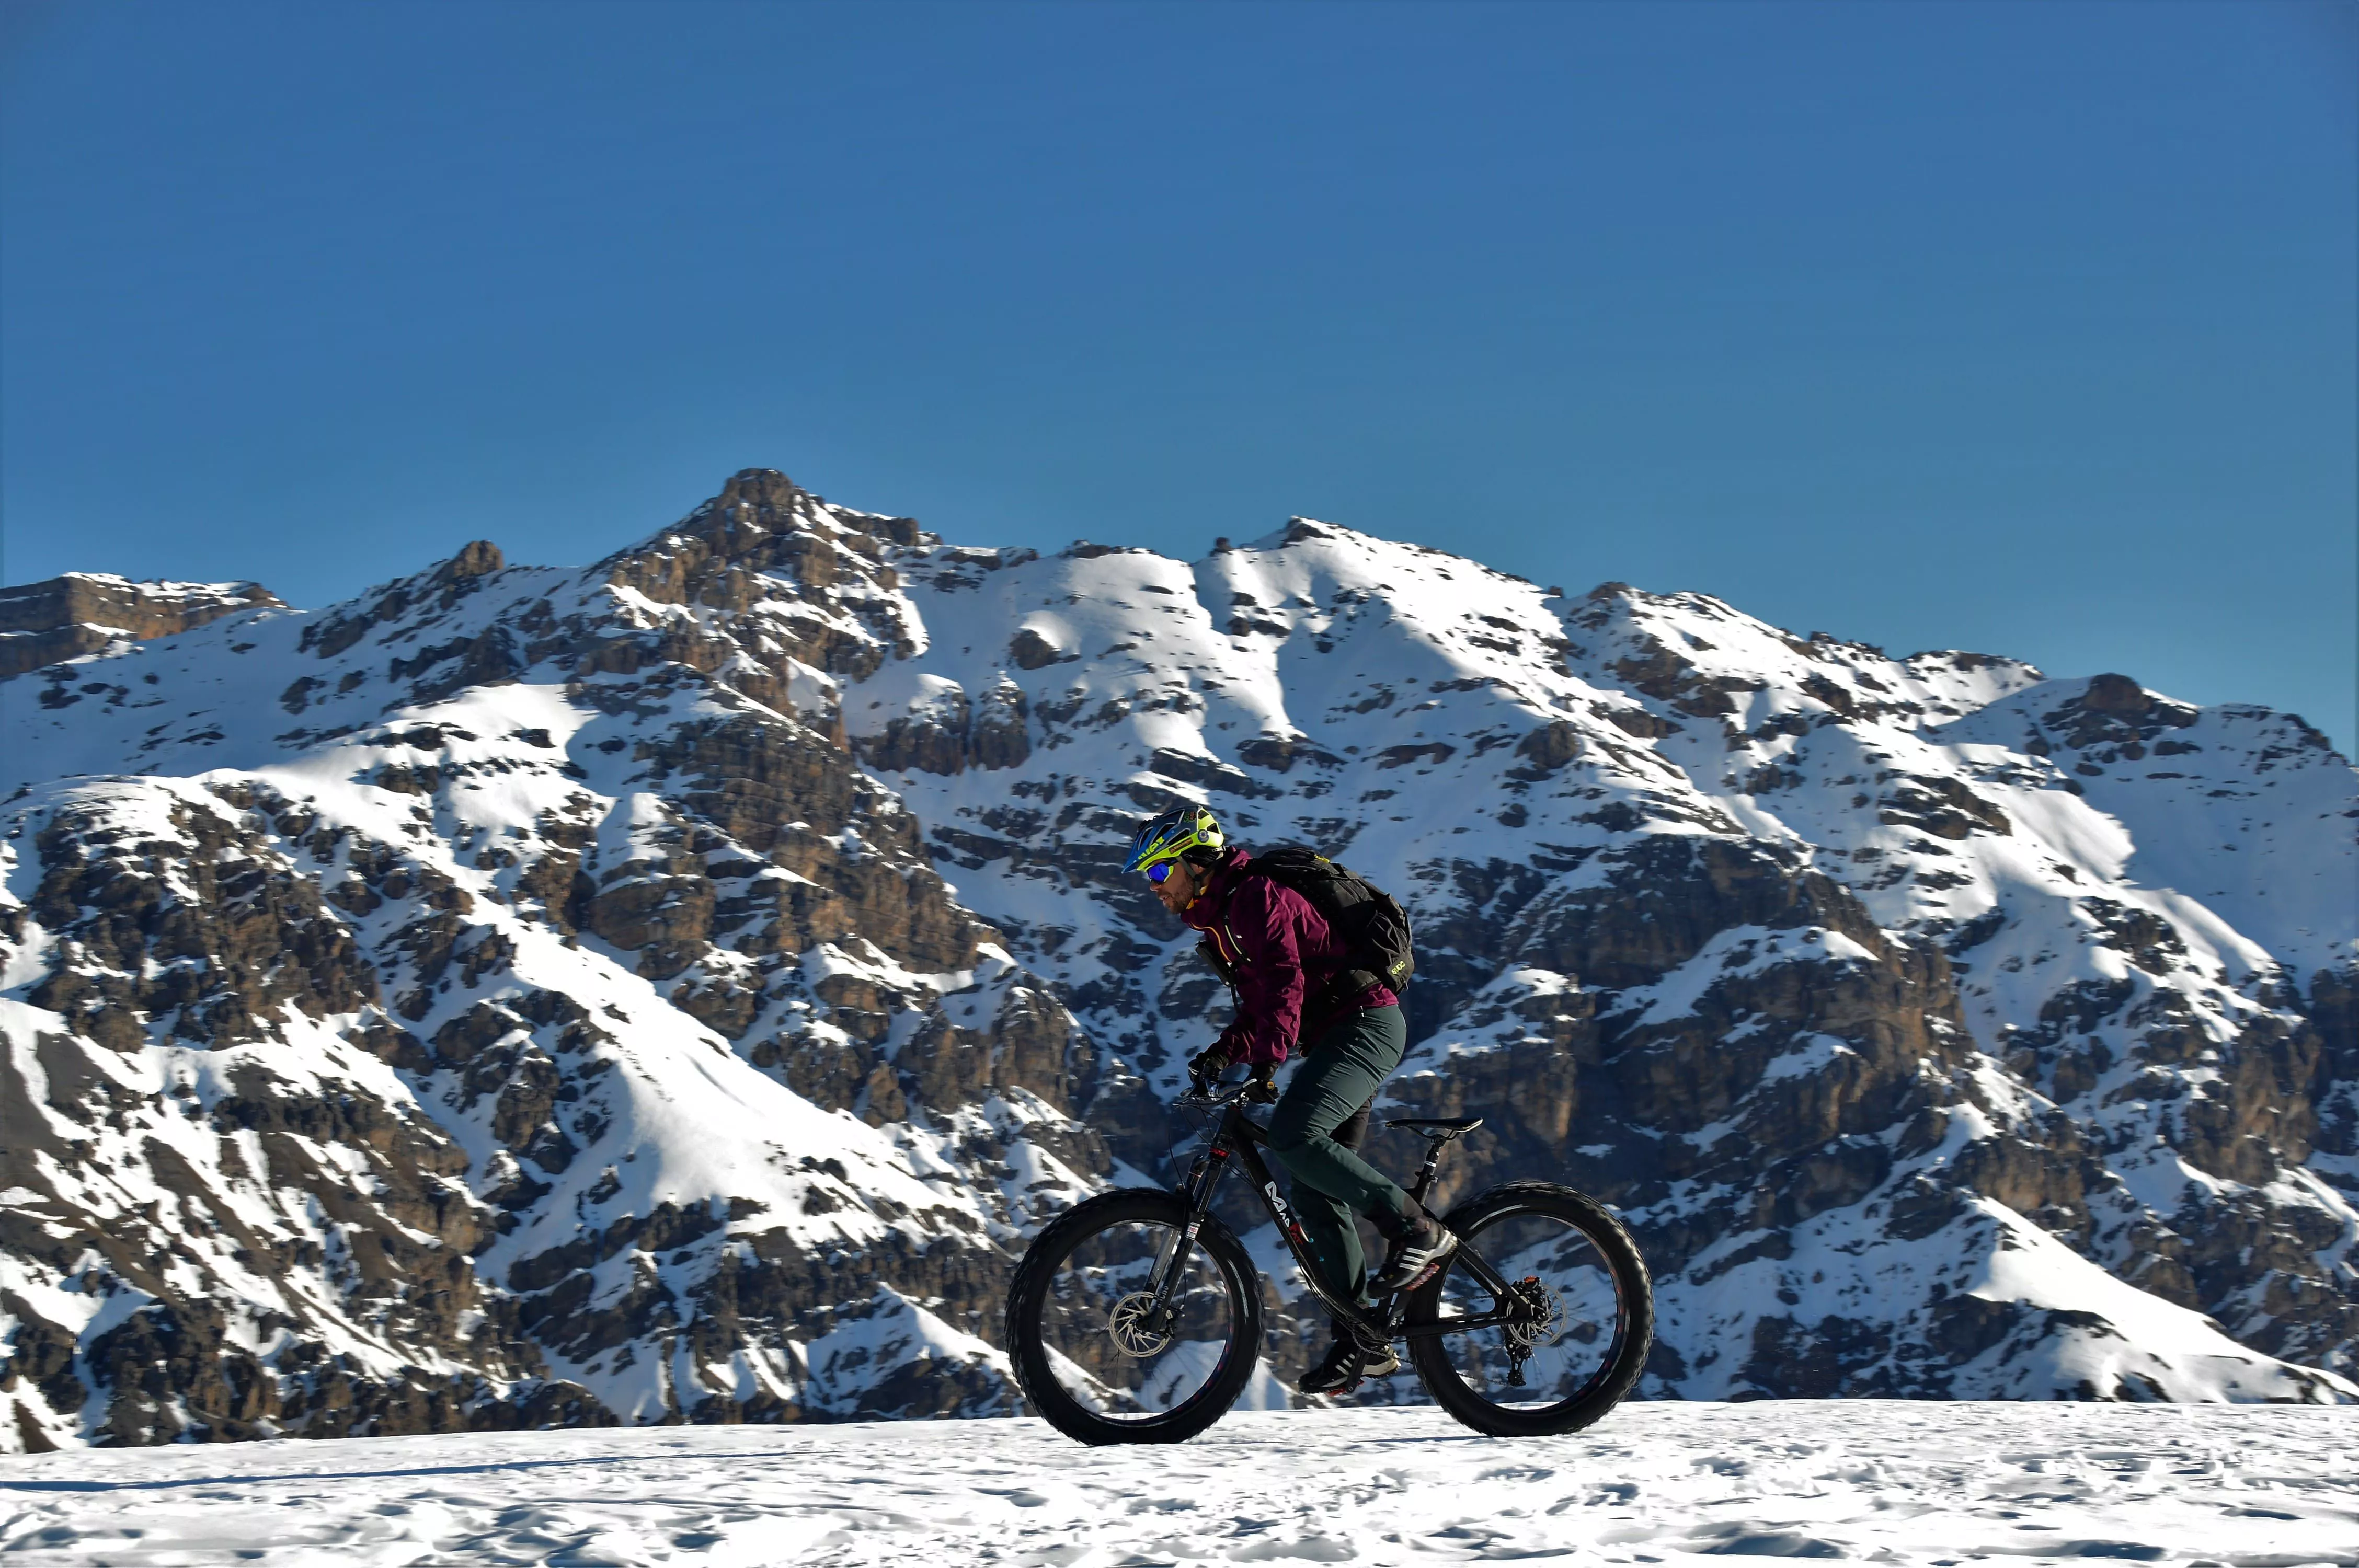 BikeLivigno in Italy, Europe | Mountain Biking - Rated 1